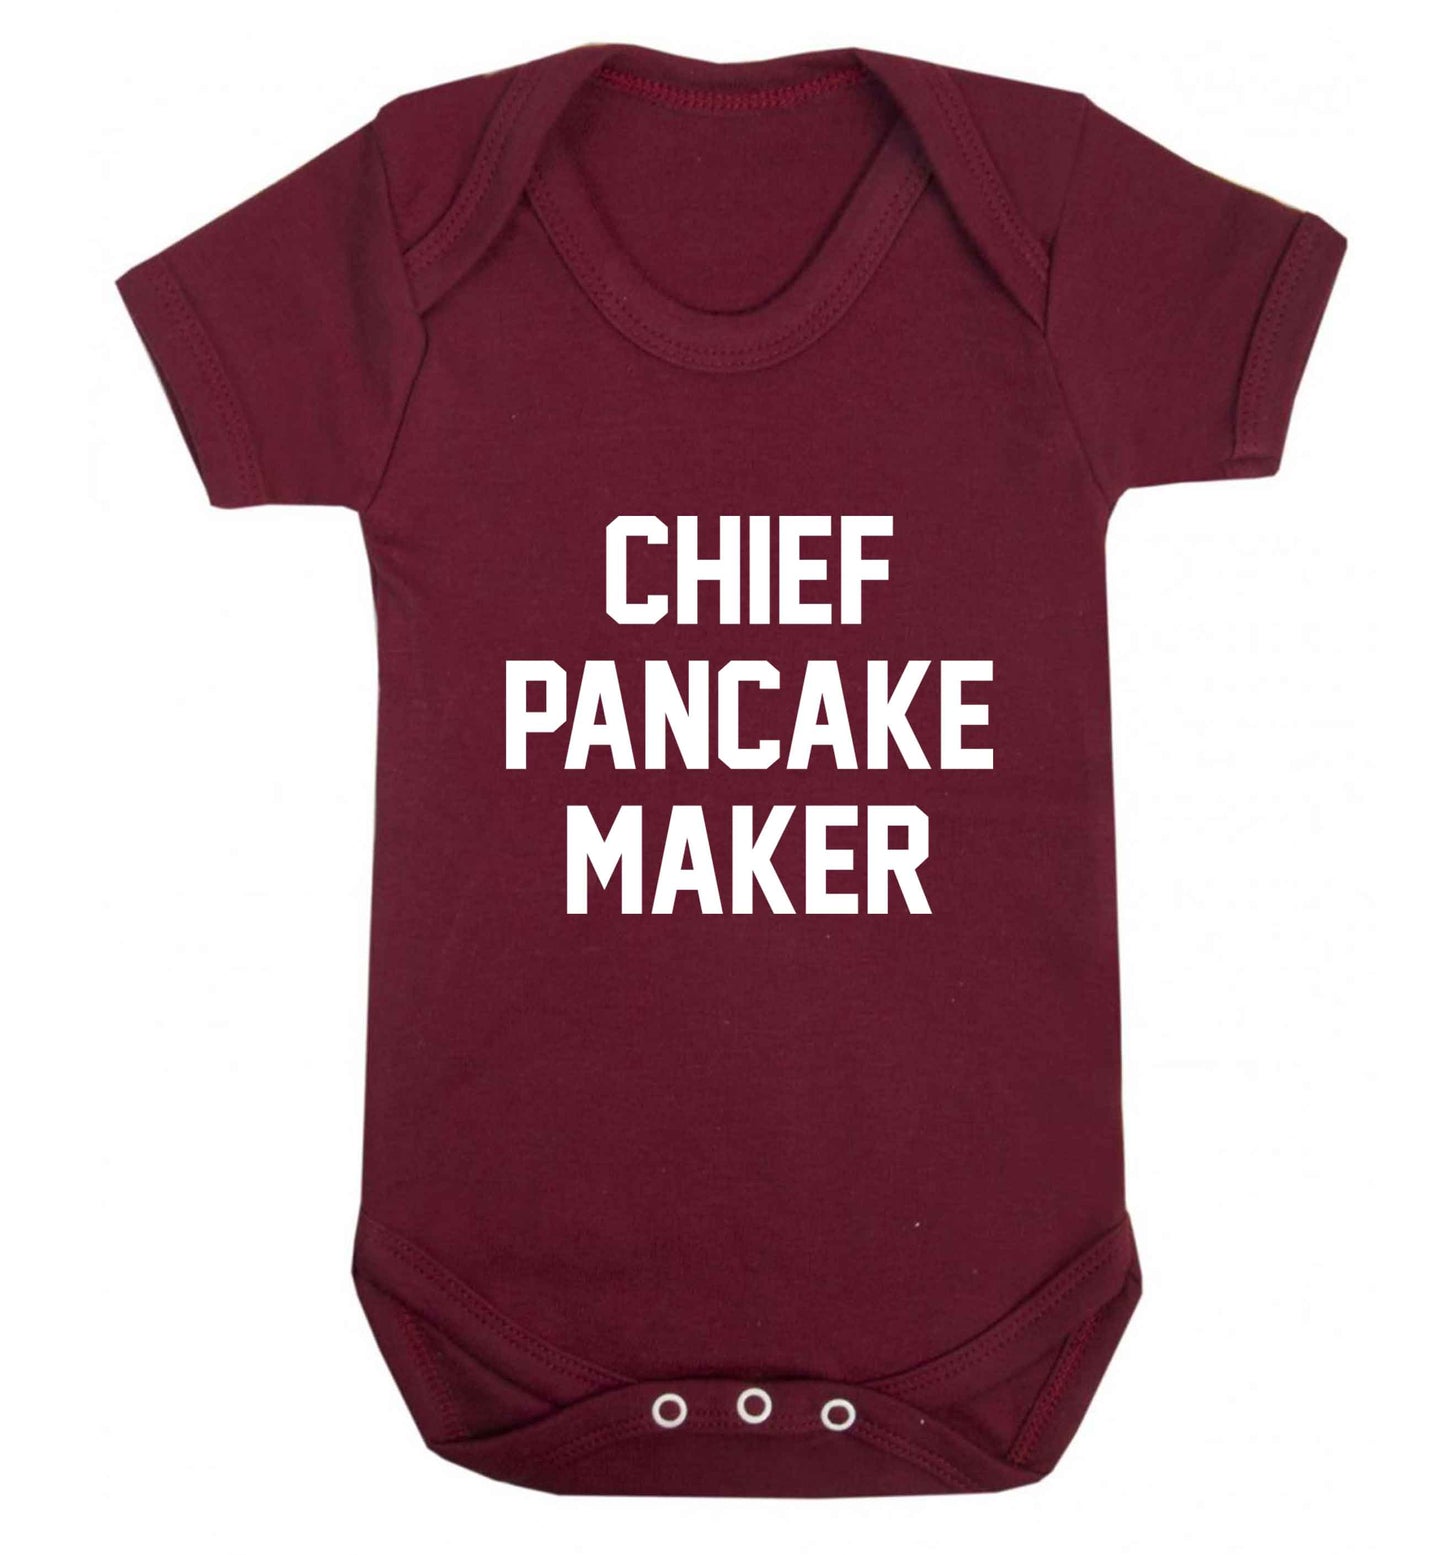 Chief pancake maker baby vest maroon 18-24 months